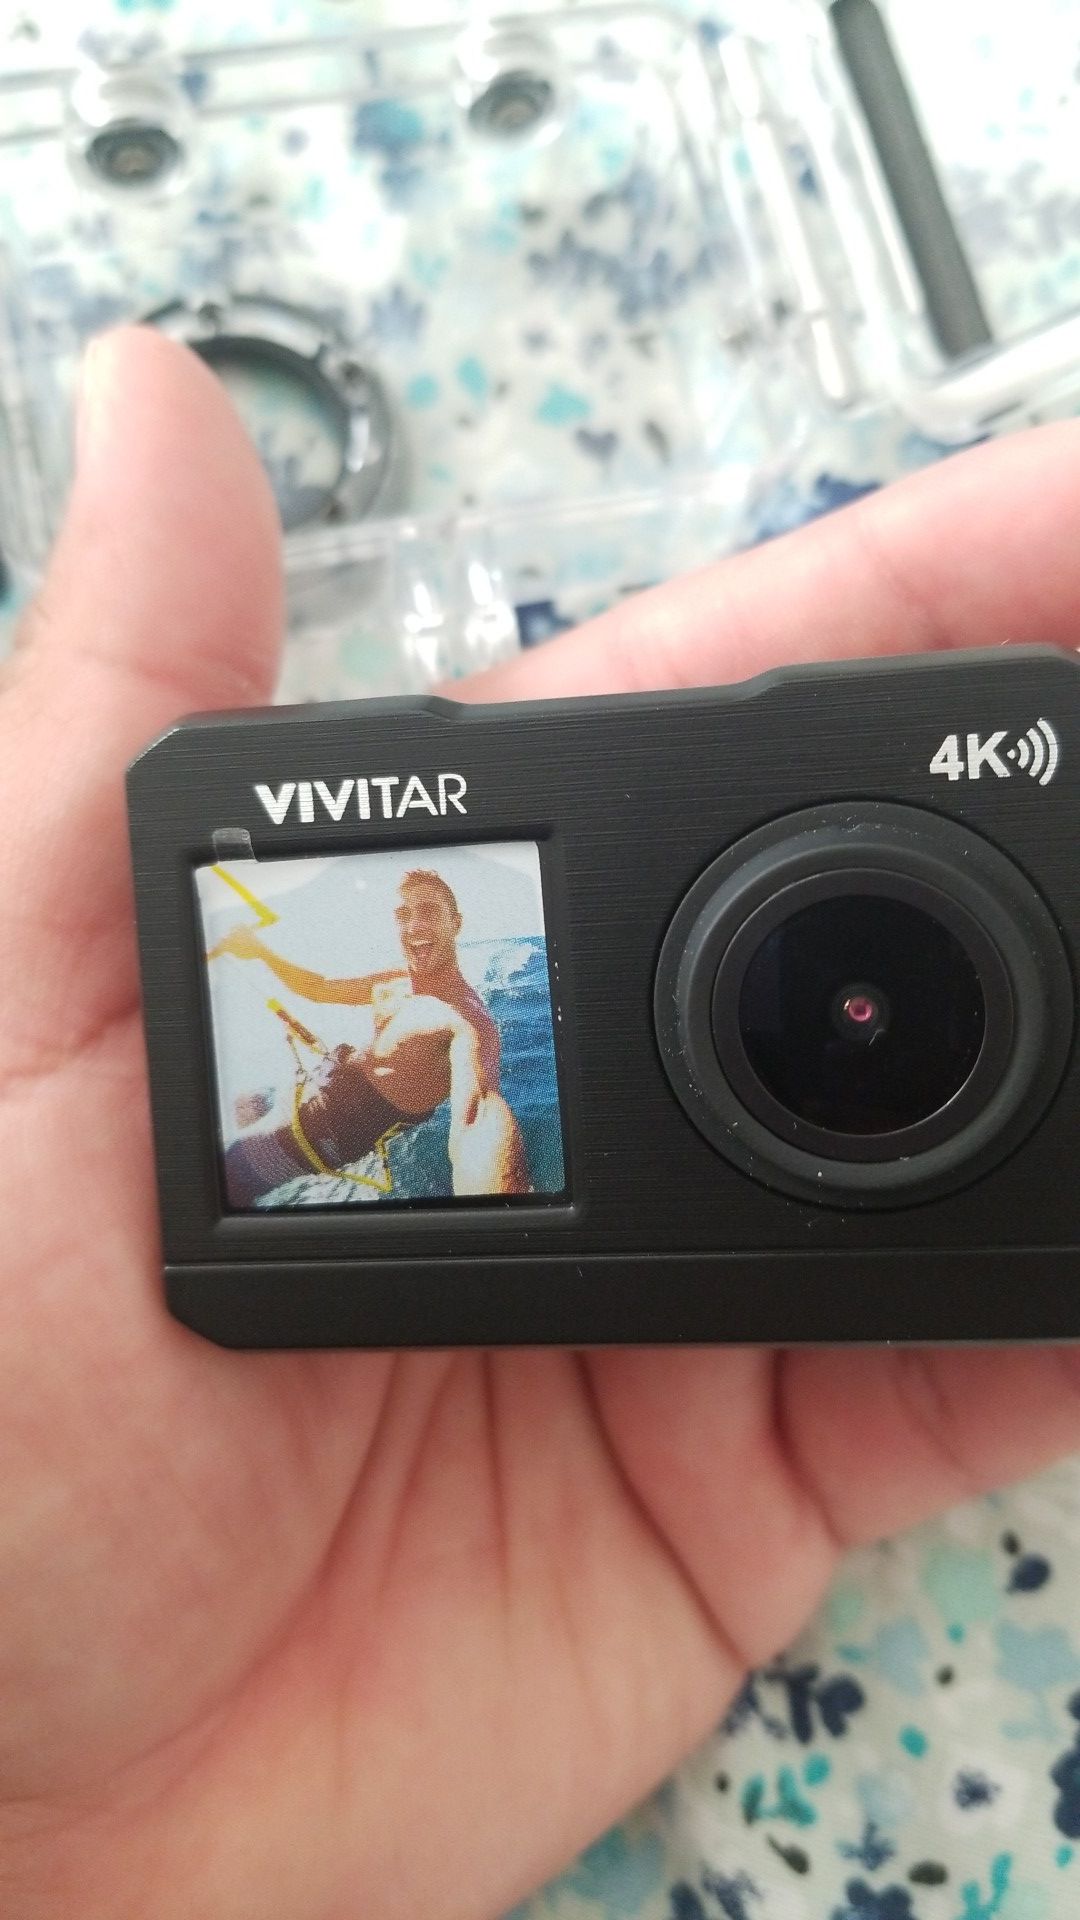 Vivitar camera 4K